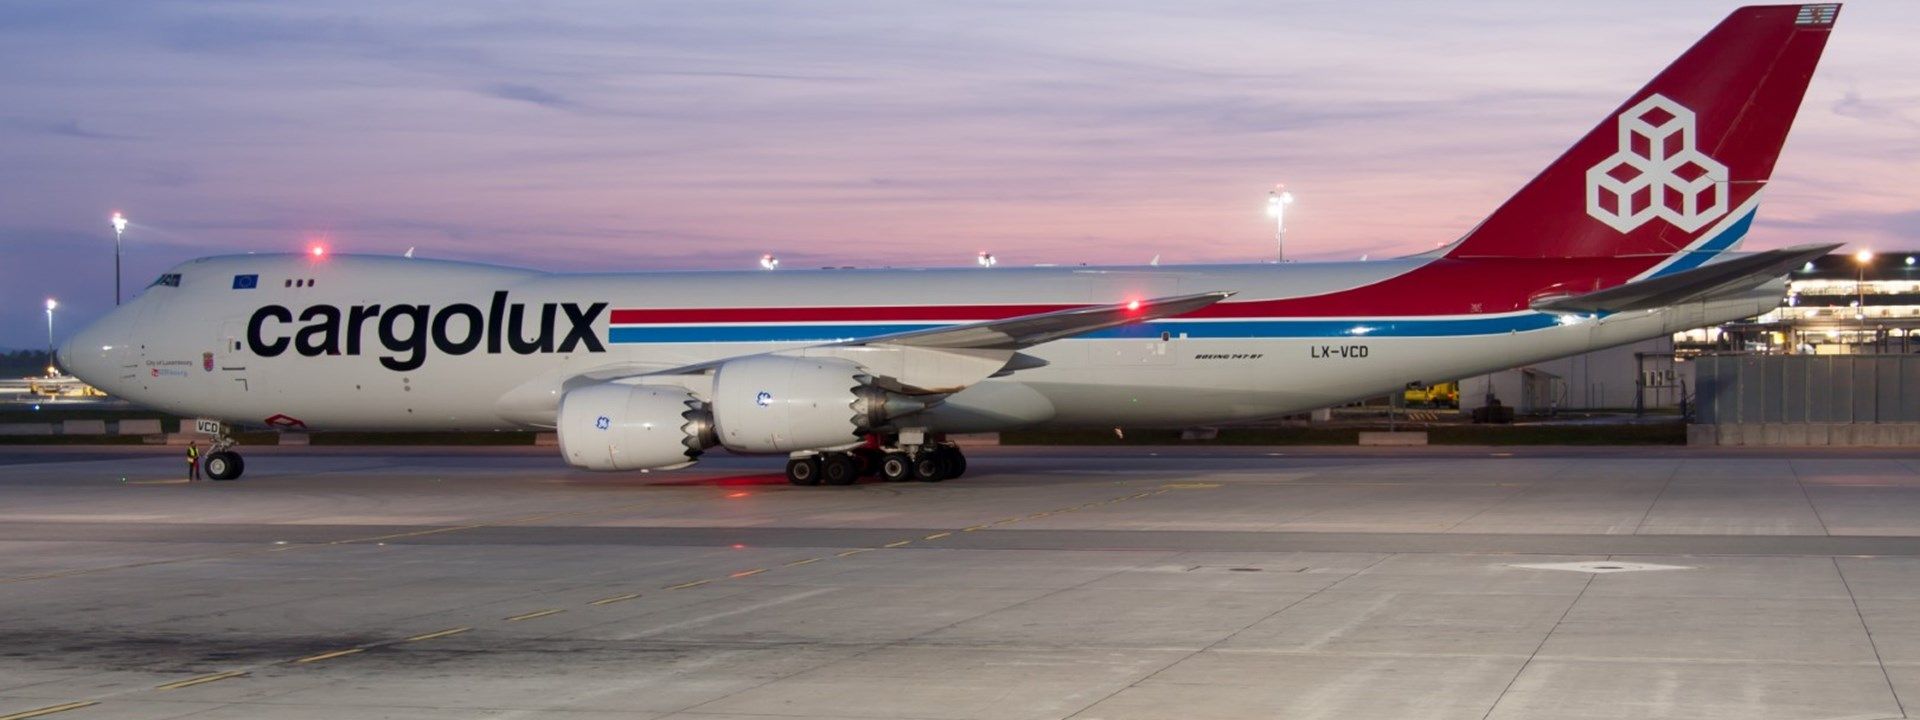 cargolux boeing 747-8F